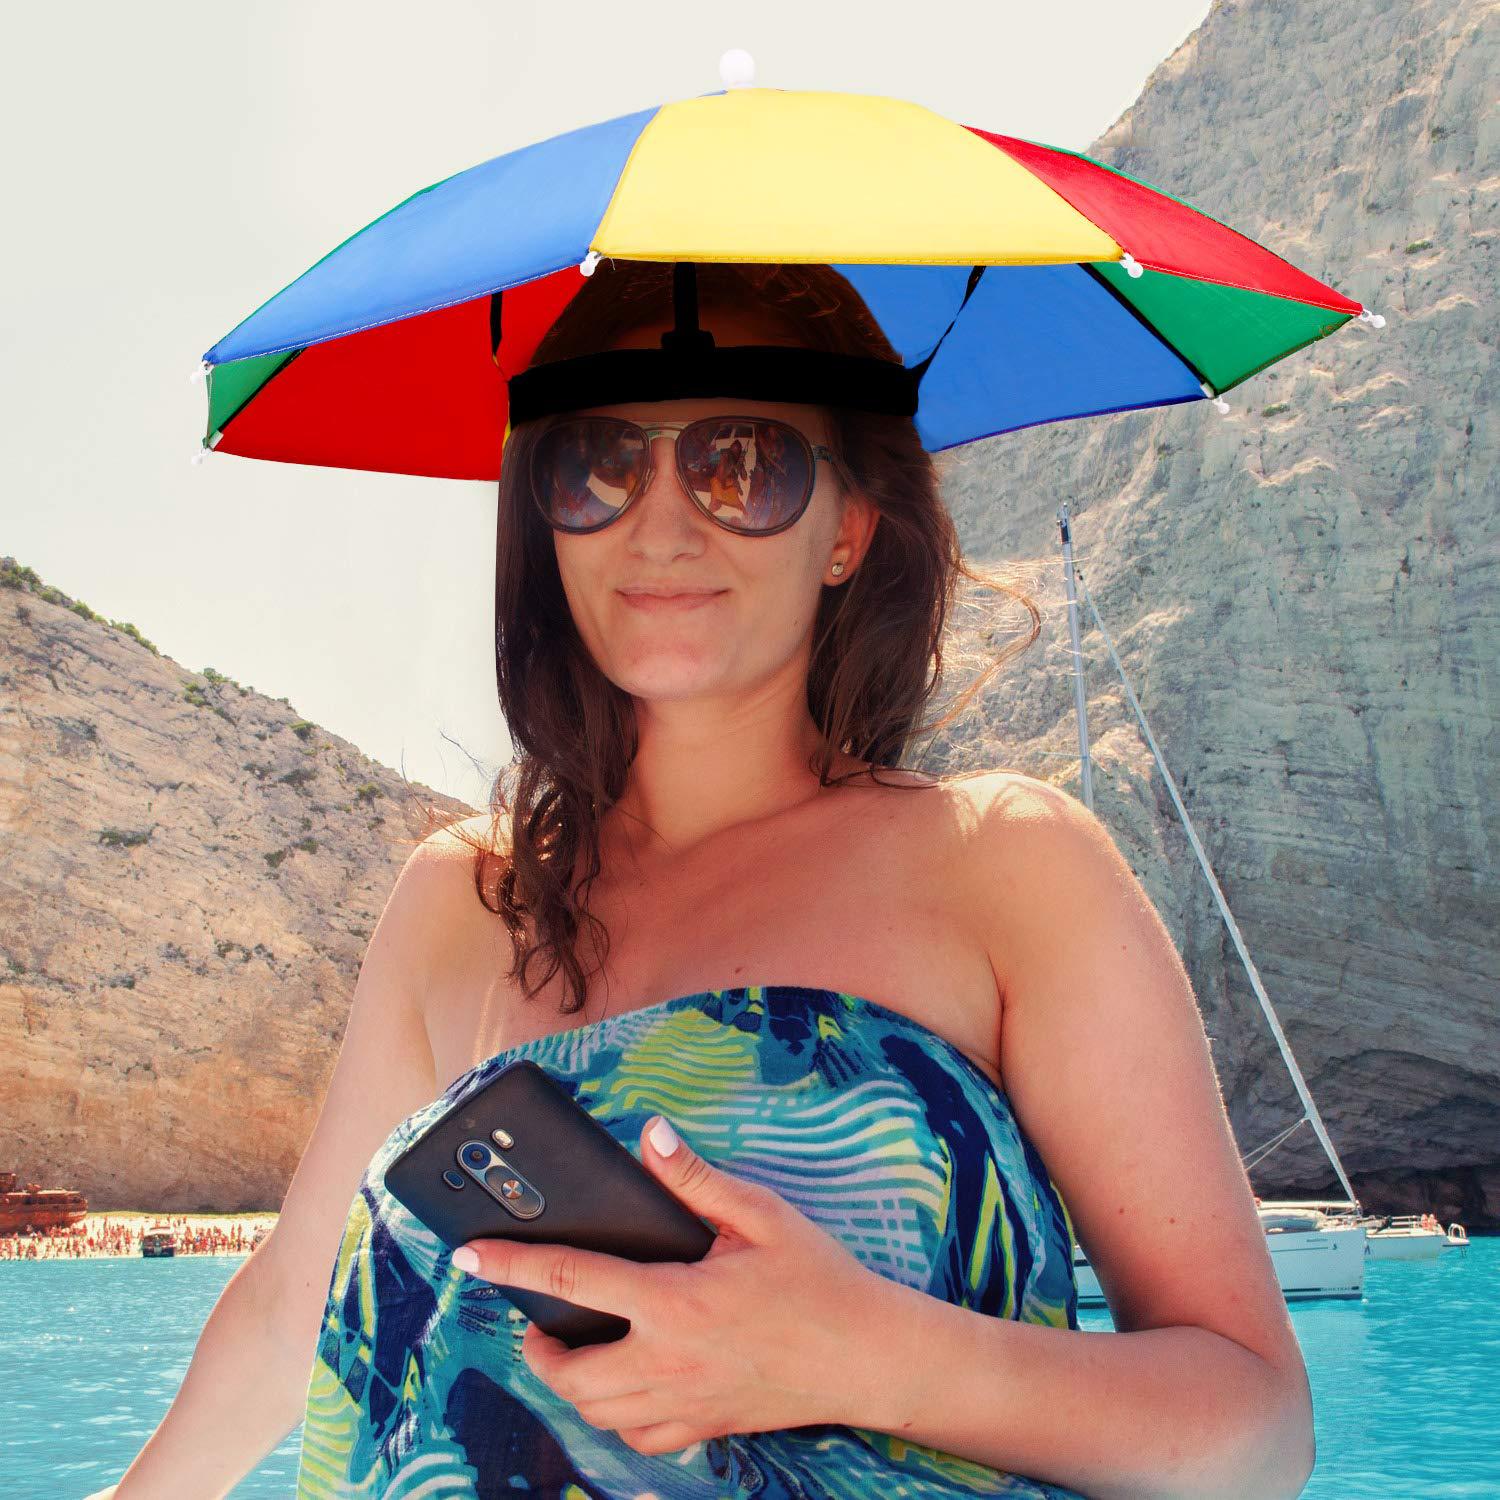 Sombrero Paraguas Lluvia Paraguas para la cabeza Anti-lluvia Pesca